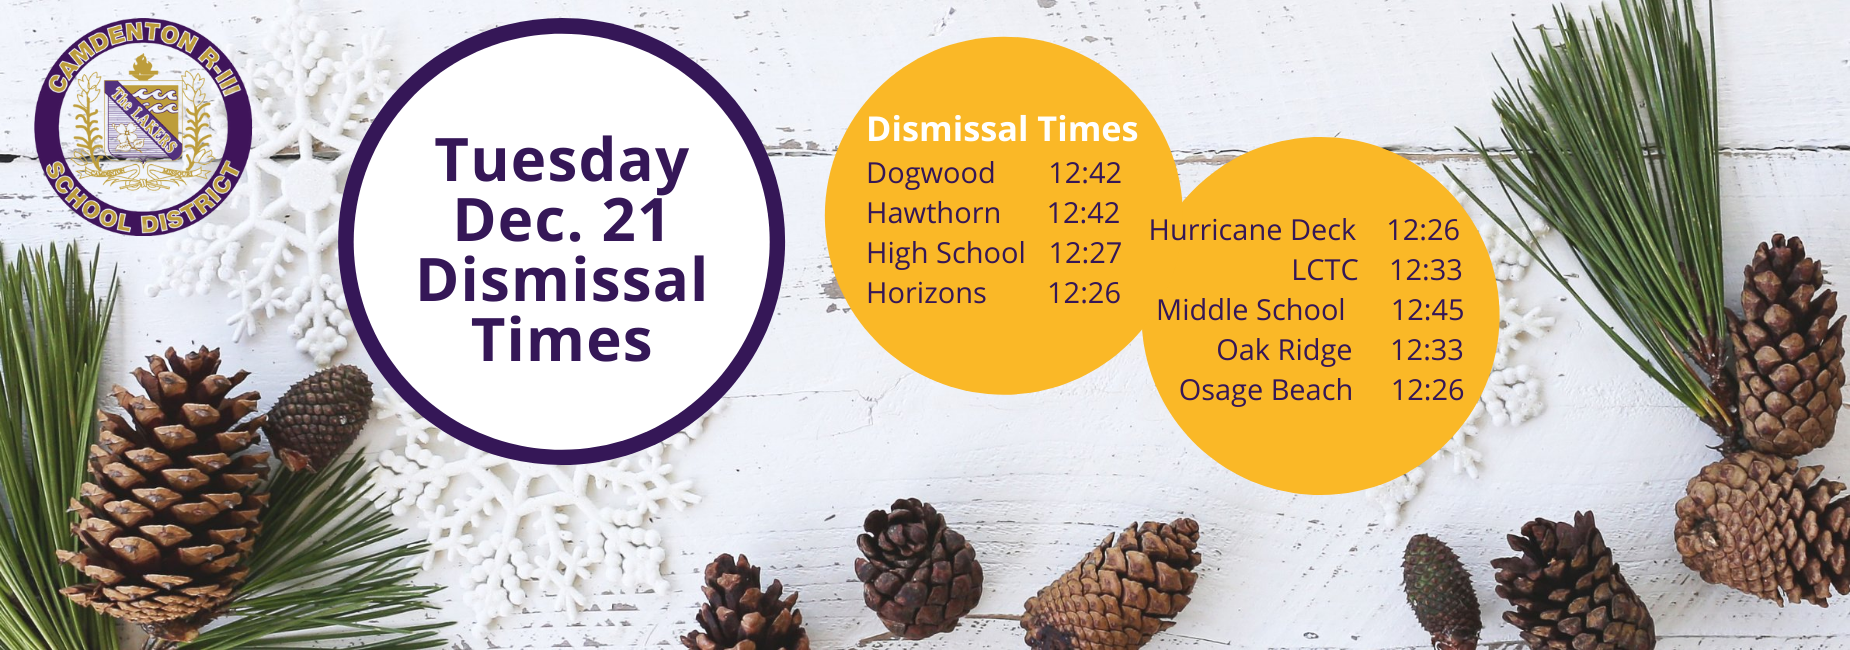 Dismissal times